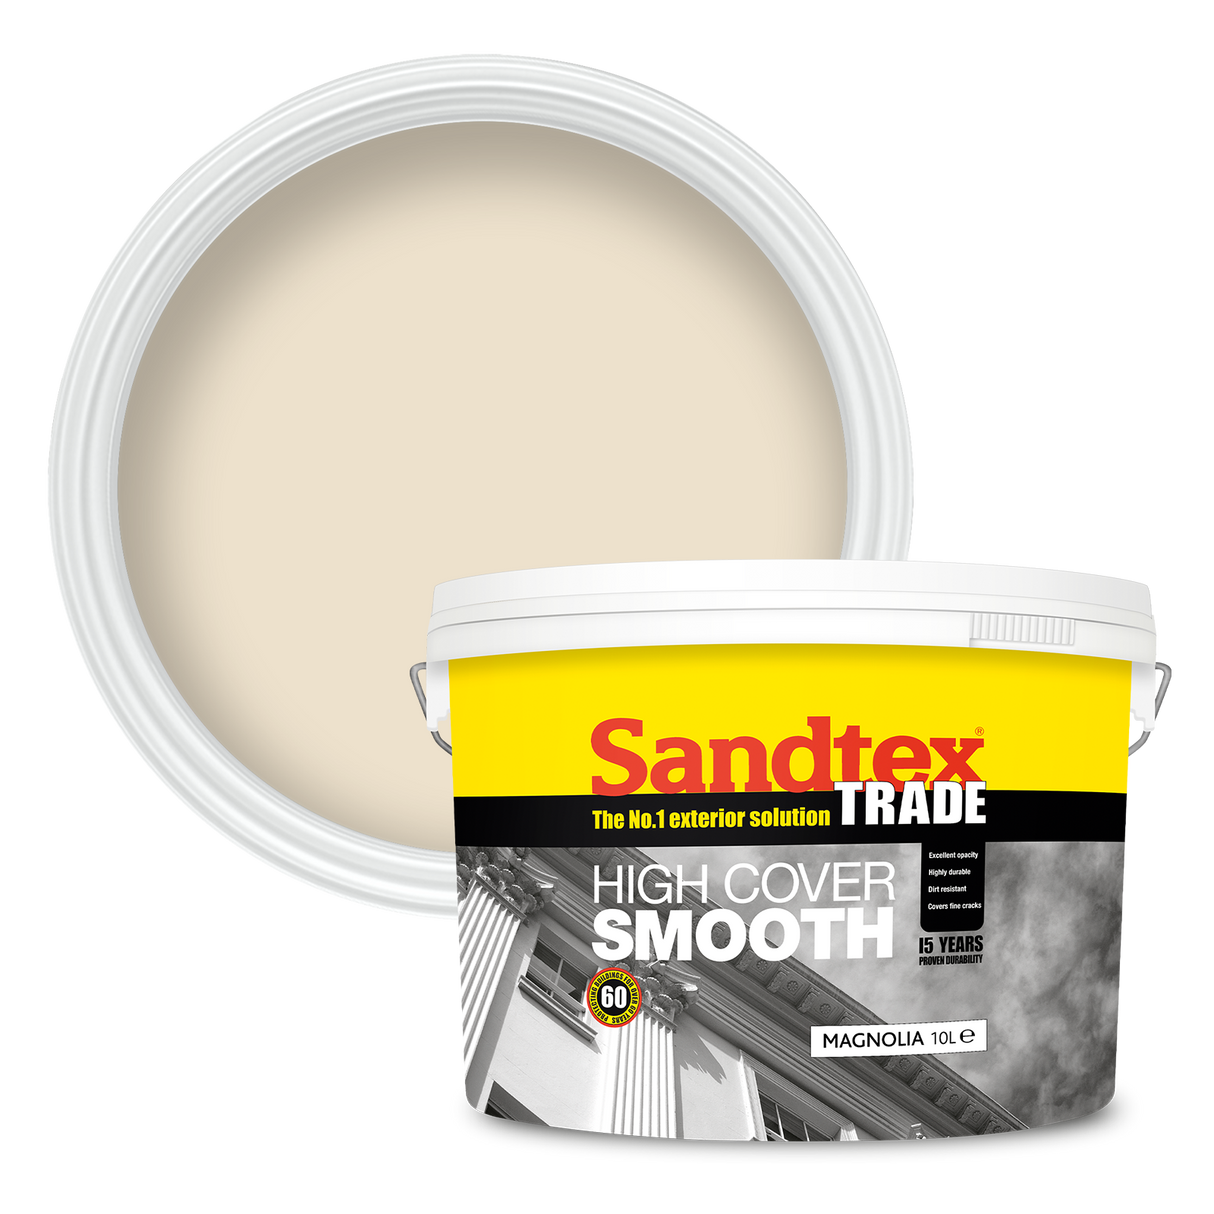 Sandtex-Trade-High-Cover-Smooth-Magnolia-10L